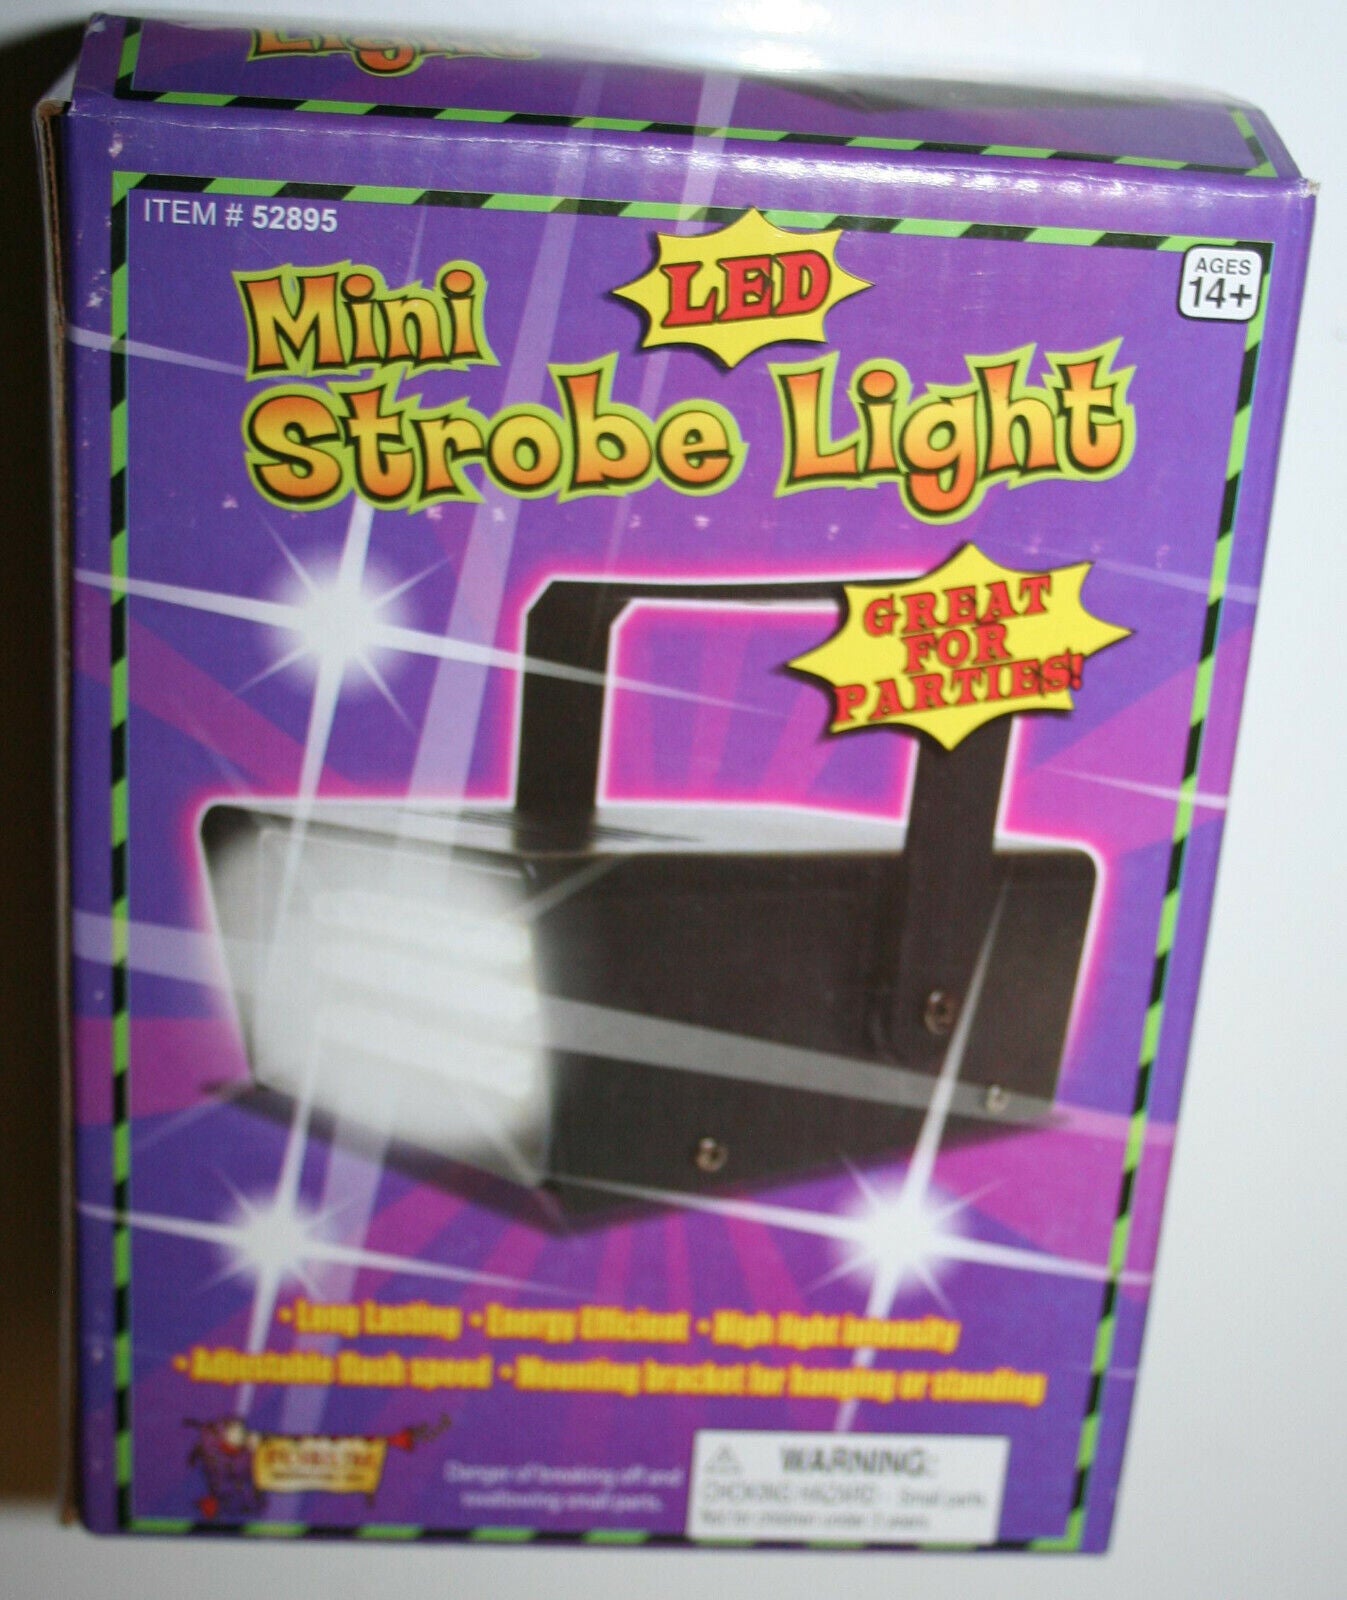 Forum Novelties Mini Strobe Light - Your Ultimate Party Lighting Companion